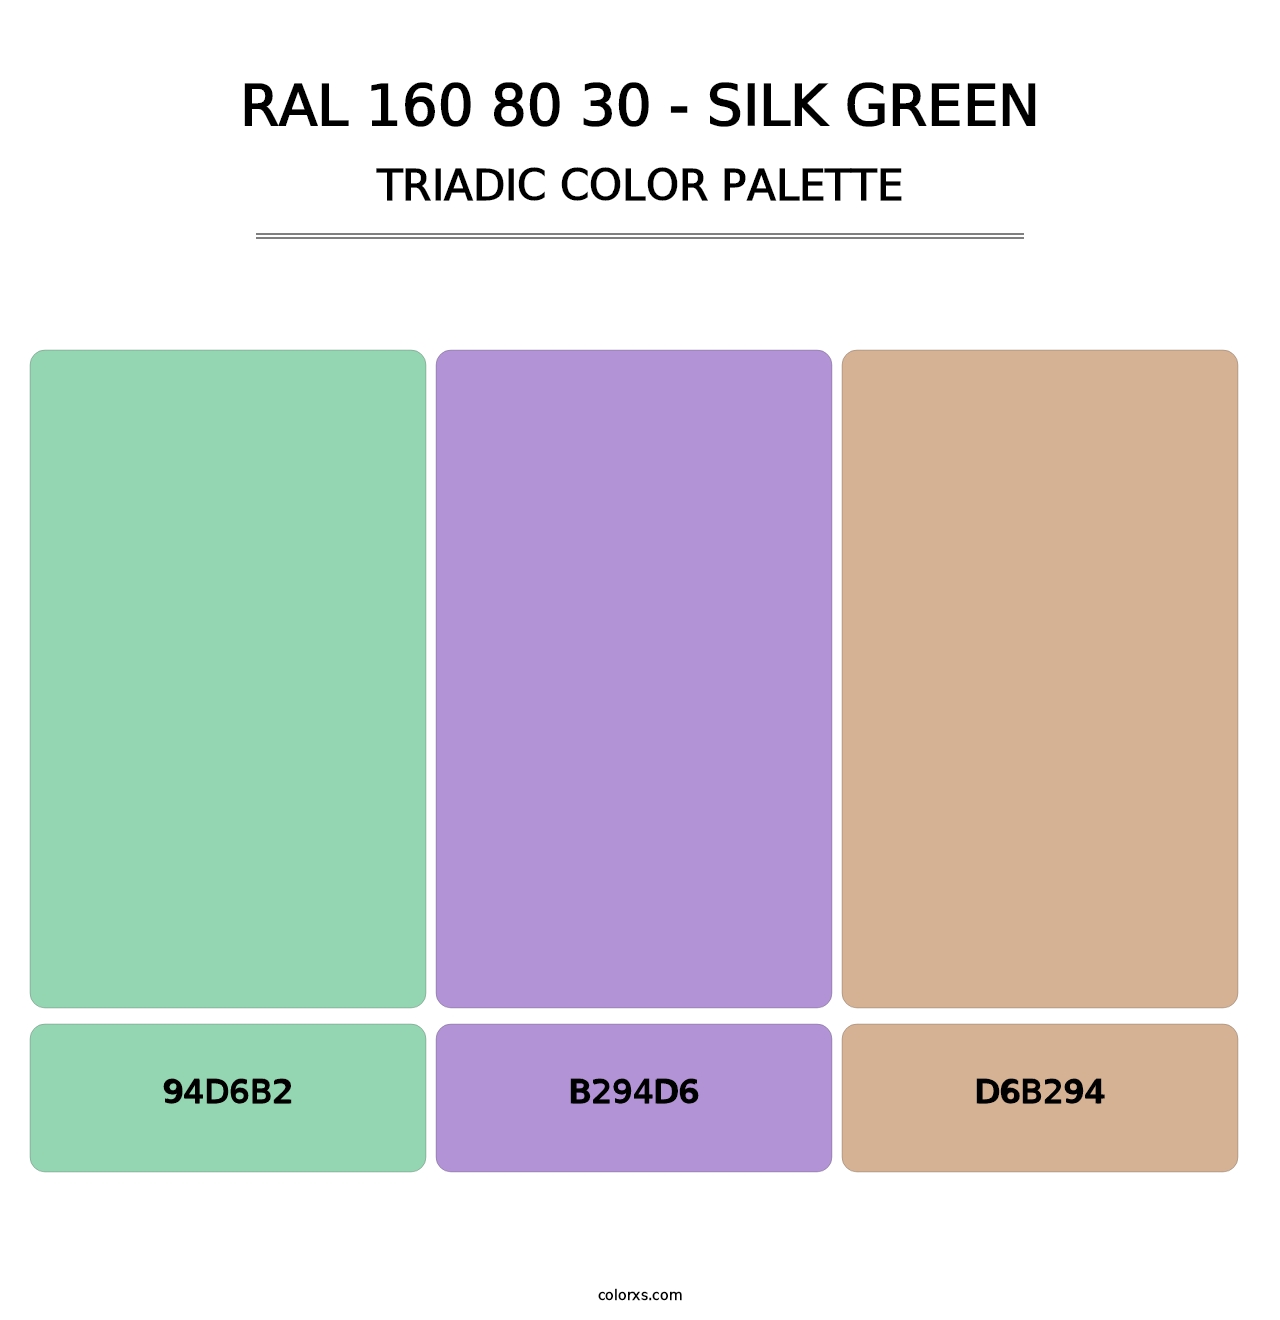 RAL 160 80 30 - Silk Green - Triadic Color Palette